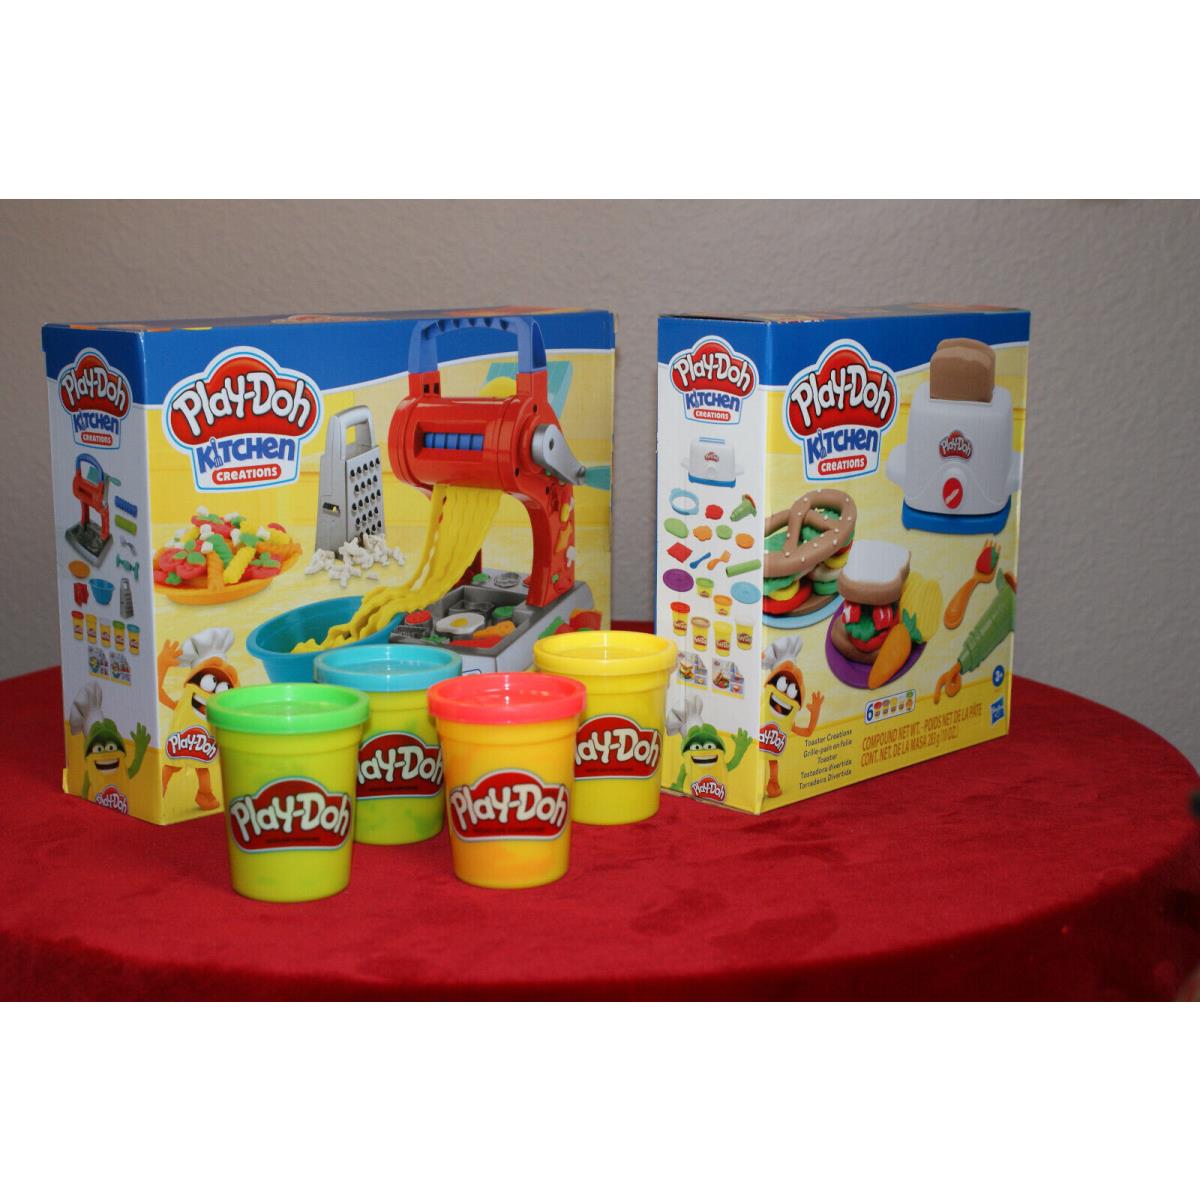 Play-doh Kitchen Creations Bundle: Toaster Creations - Noodle Party Sets Bonus